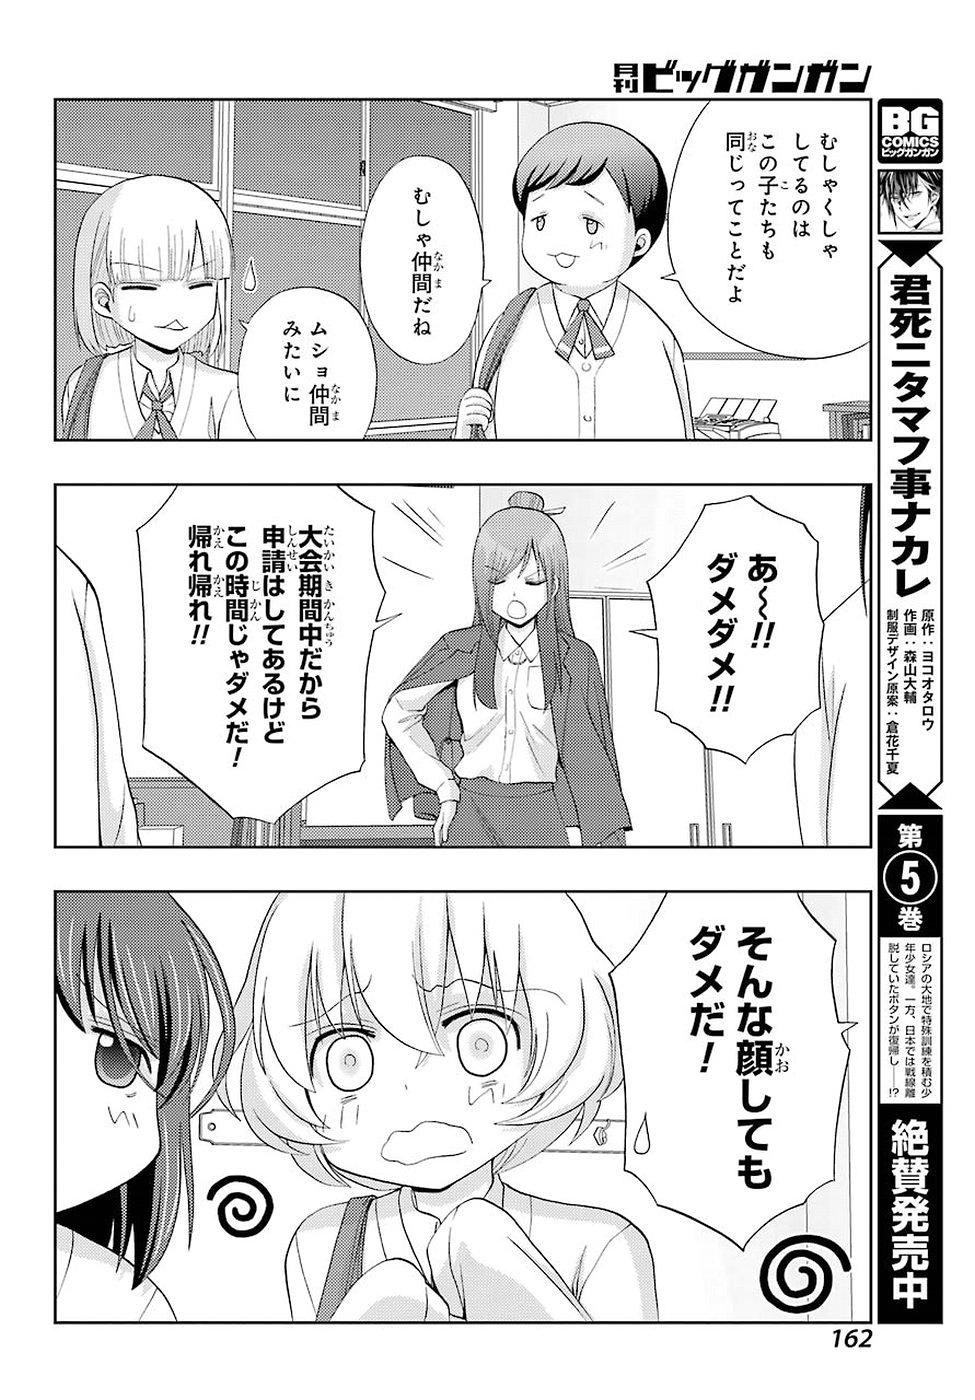 Shinohayu - The Dawn of Age Manga - Chapter 053 - Page 18